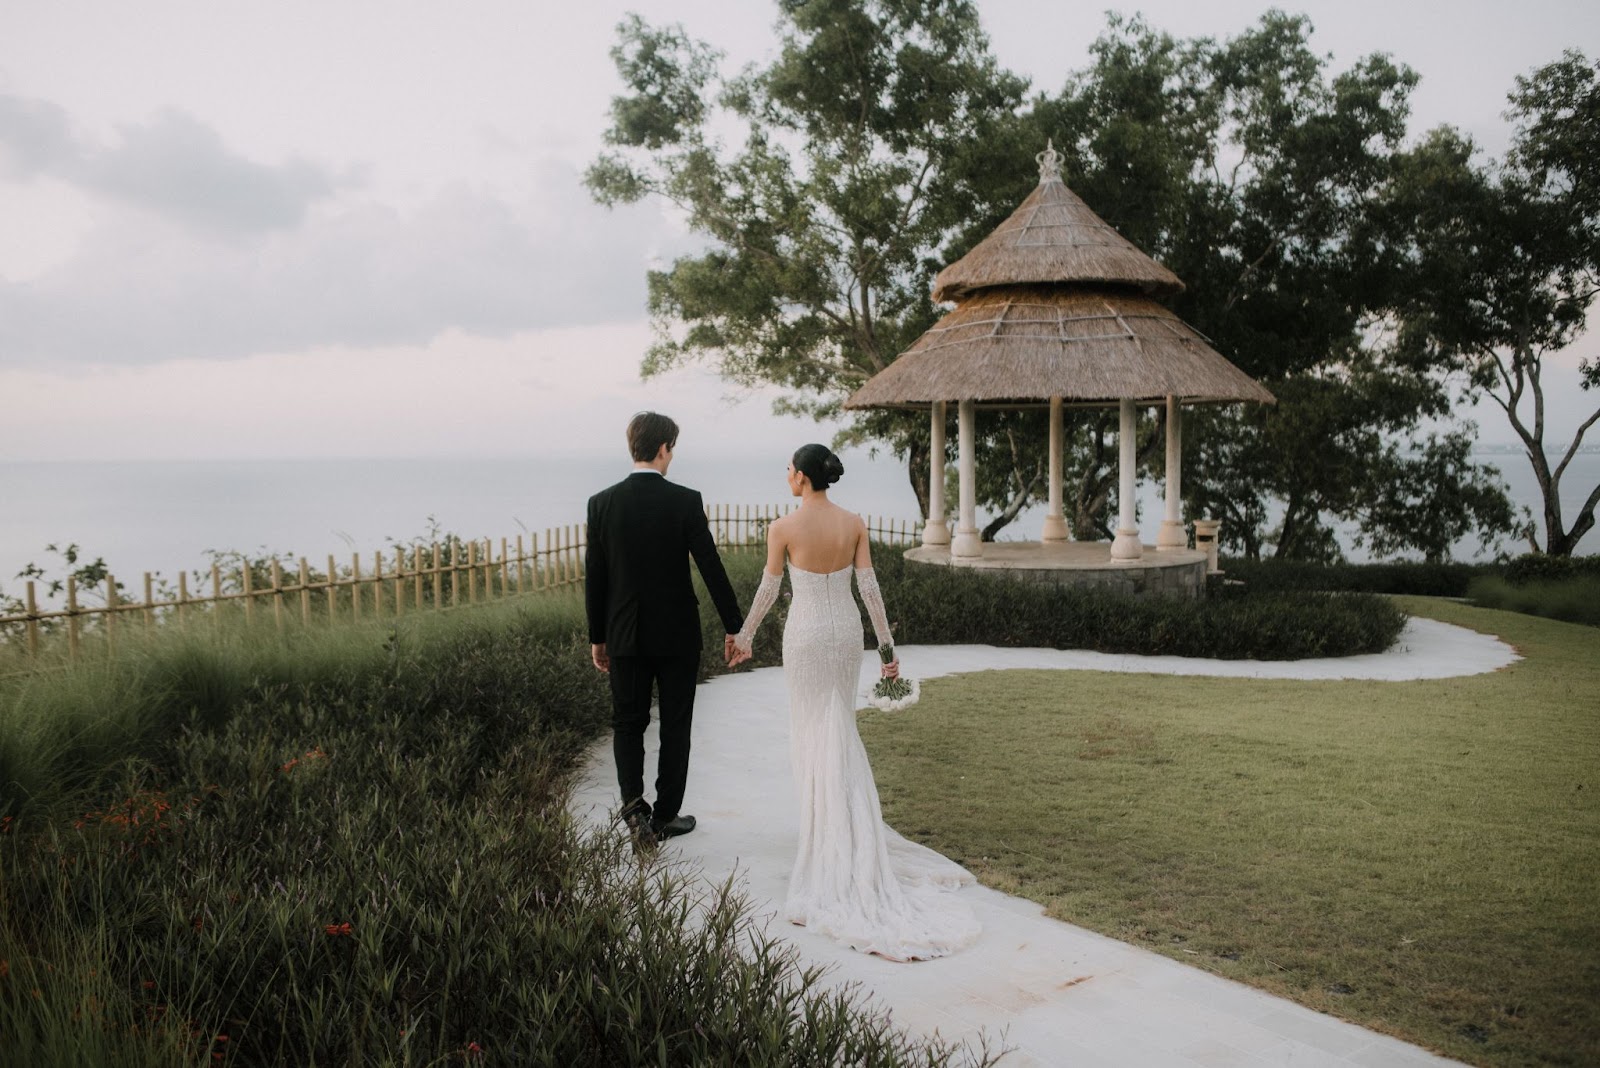 A Magical Wedding in Bali